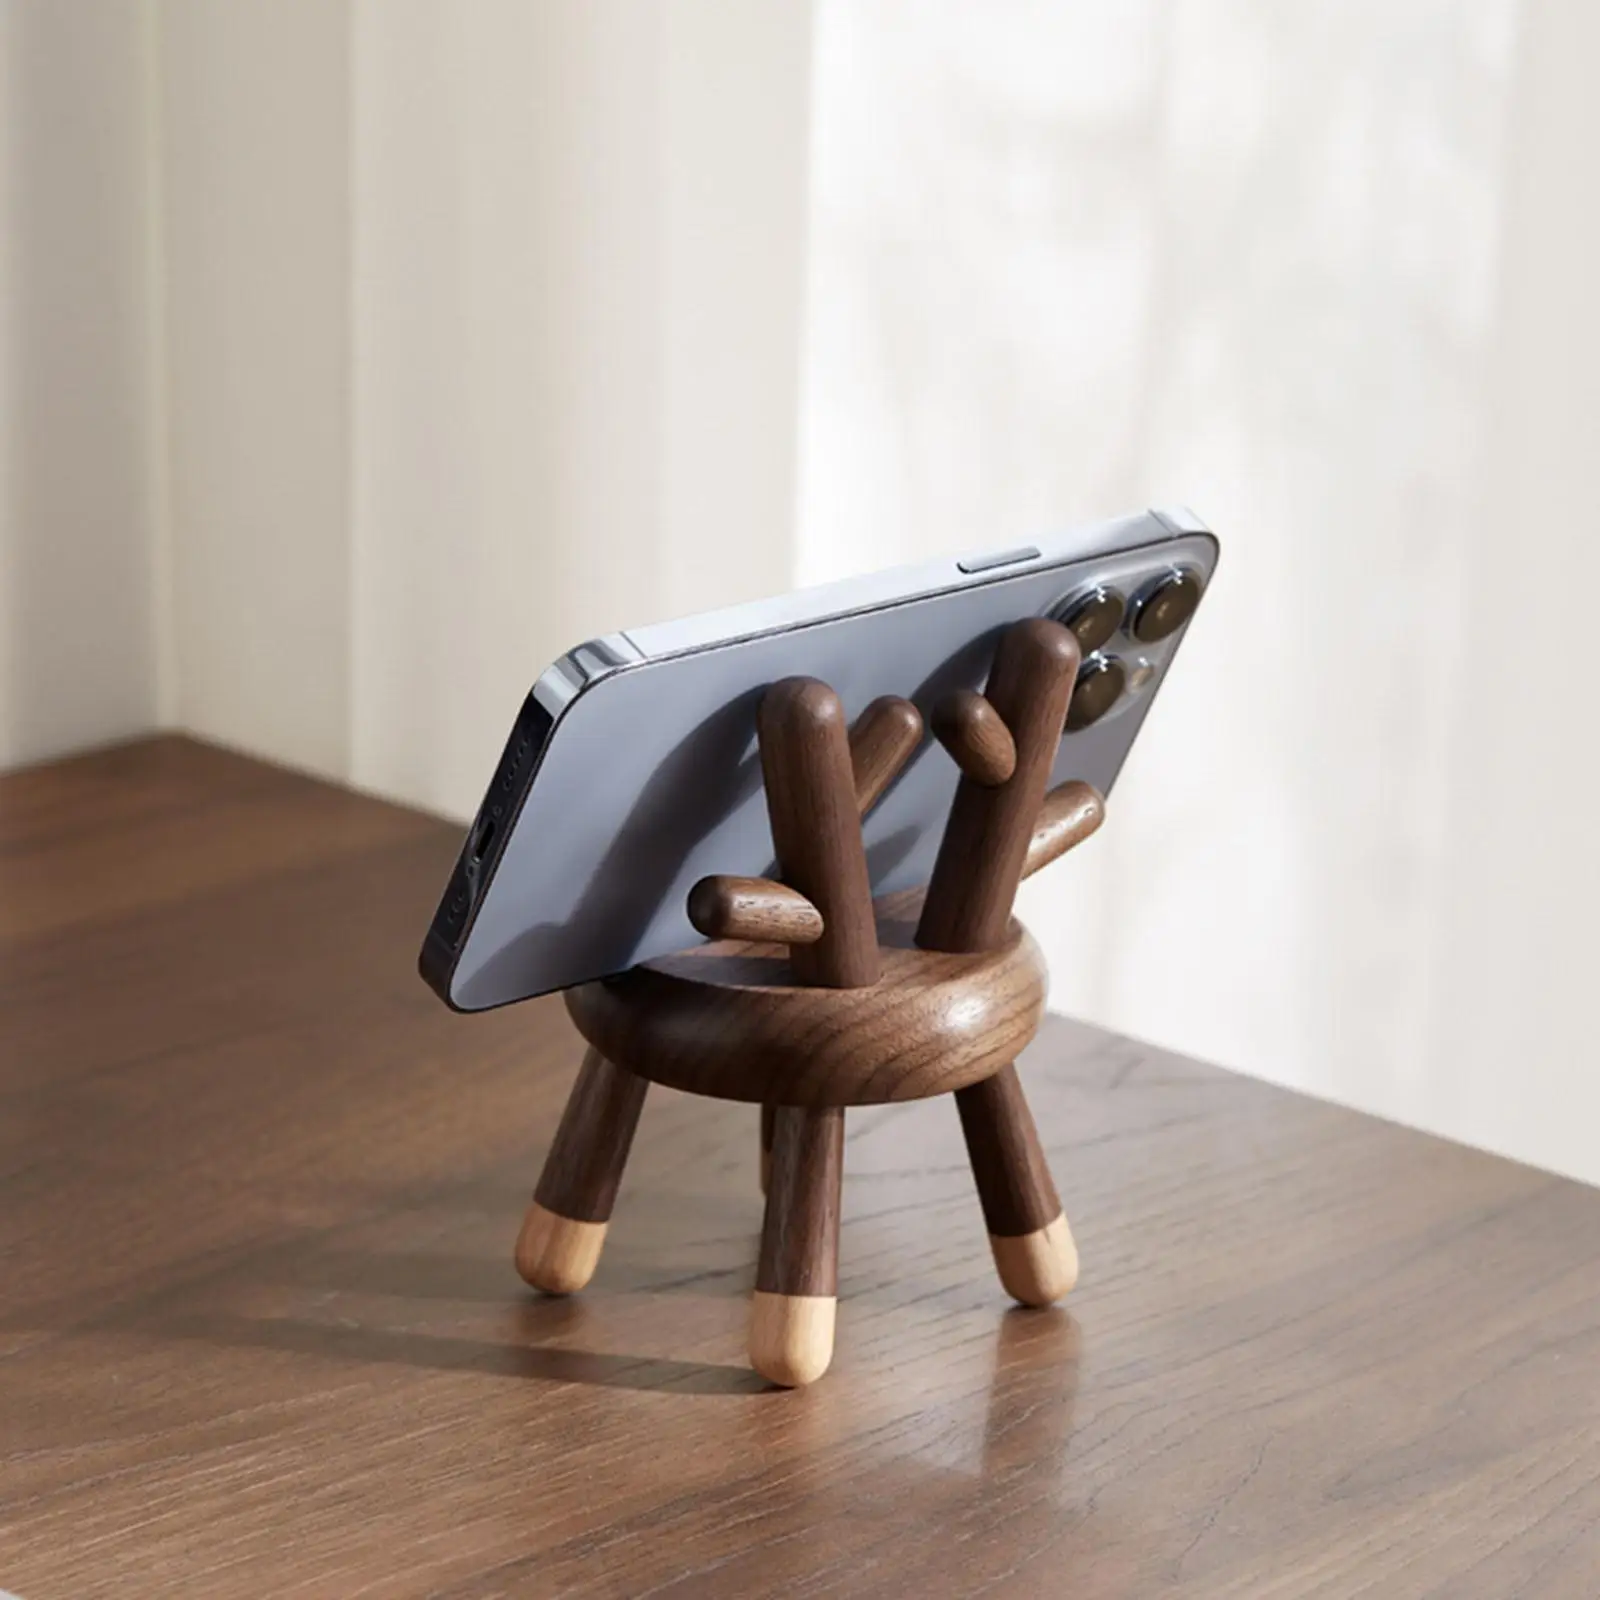 Antlers Chair Desktop Phone Holder Lovely Ornaments Wooden Universal Mini Bracket Desk Cellphone Stand for Office Home